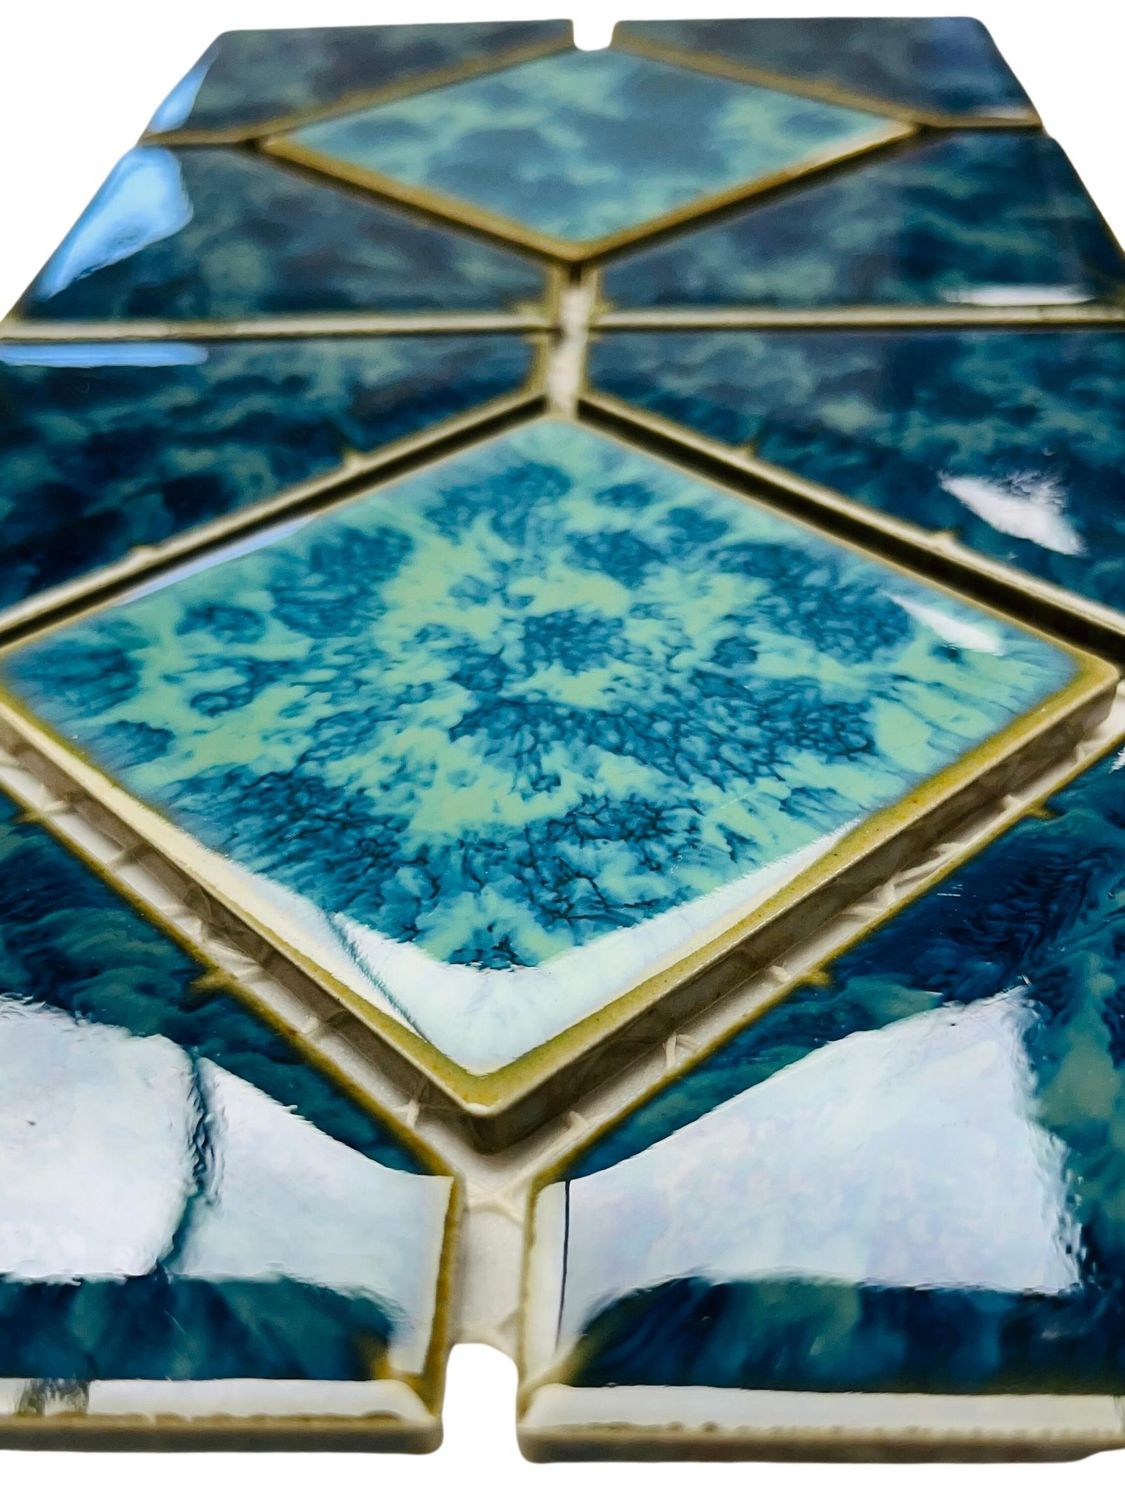 Aquarium Green Bluish Diamond Porcelain Lineup Border Pool Wall Tile on 6x12 Mesh for Easy Installation, for Bathroom Wall, Backsplash